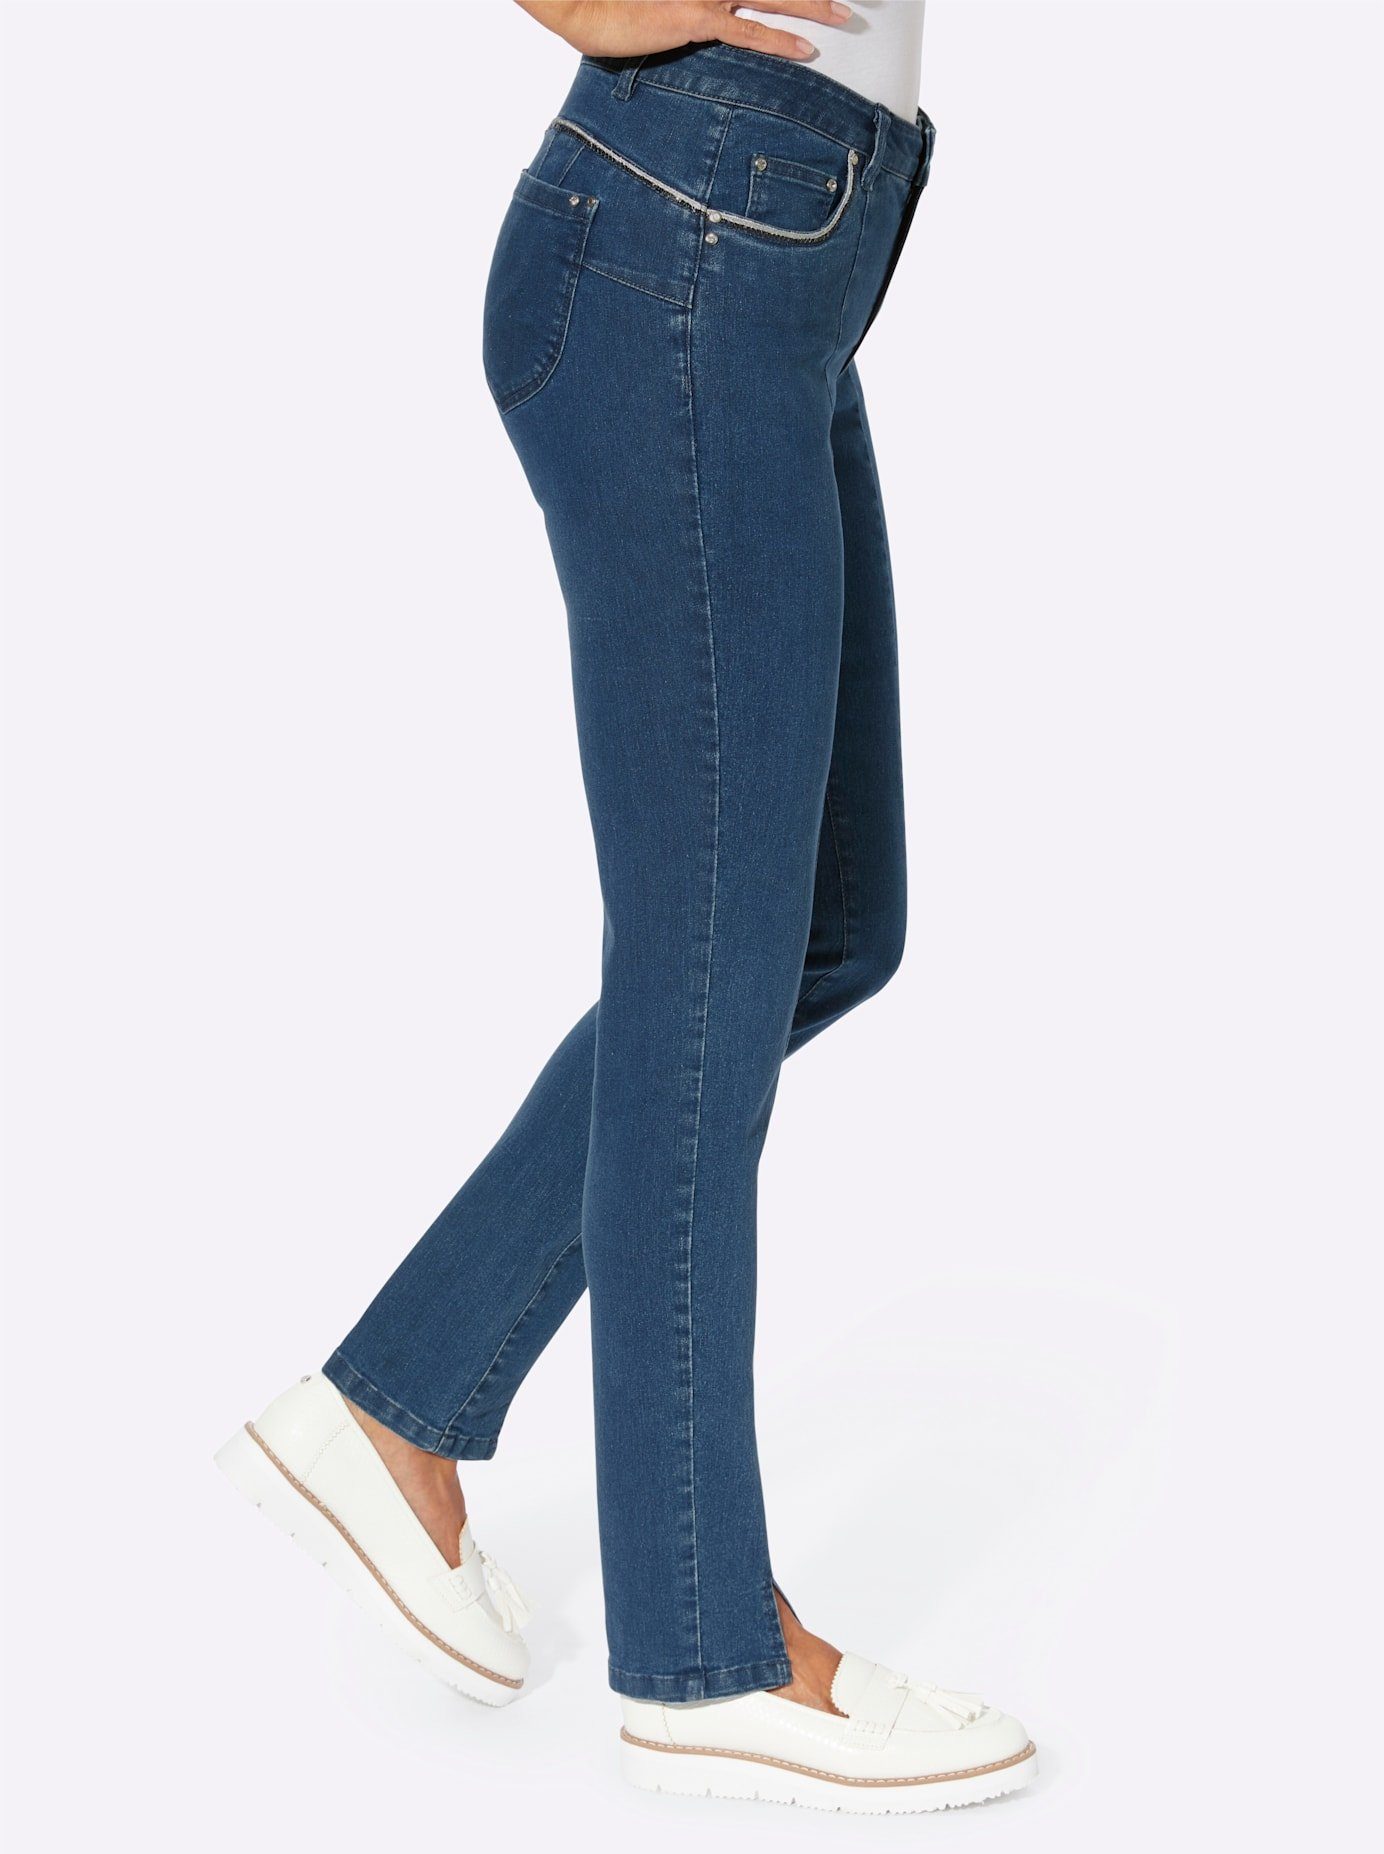 Classic Inspirationen 5-pocket jeans